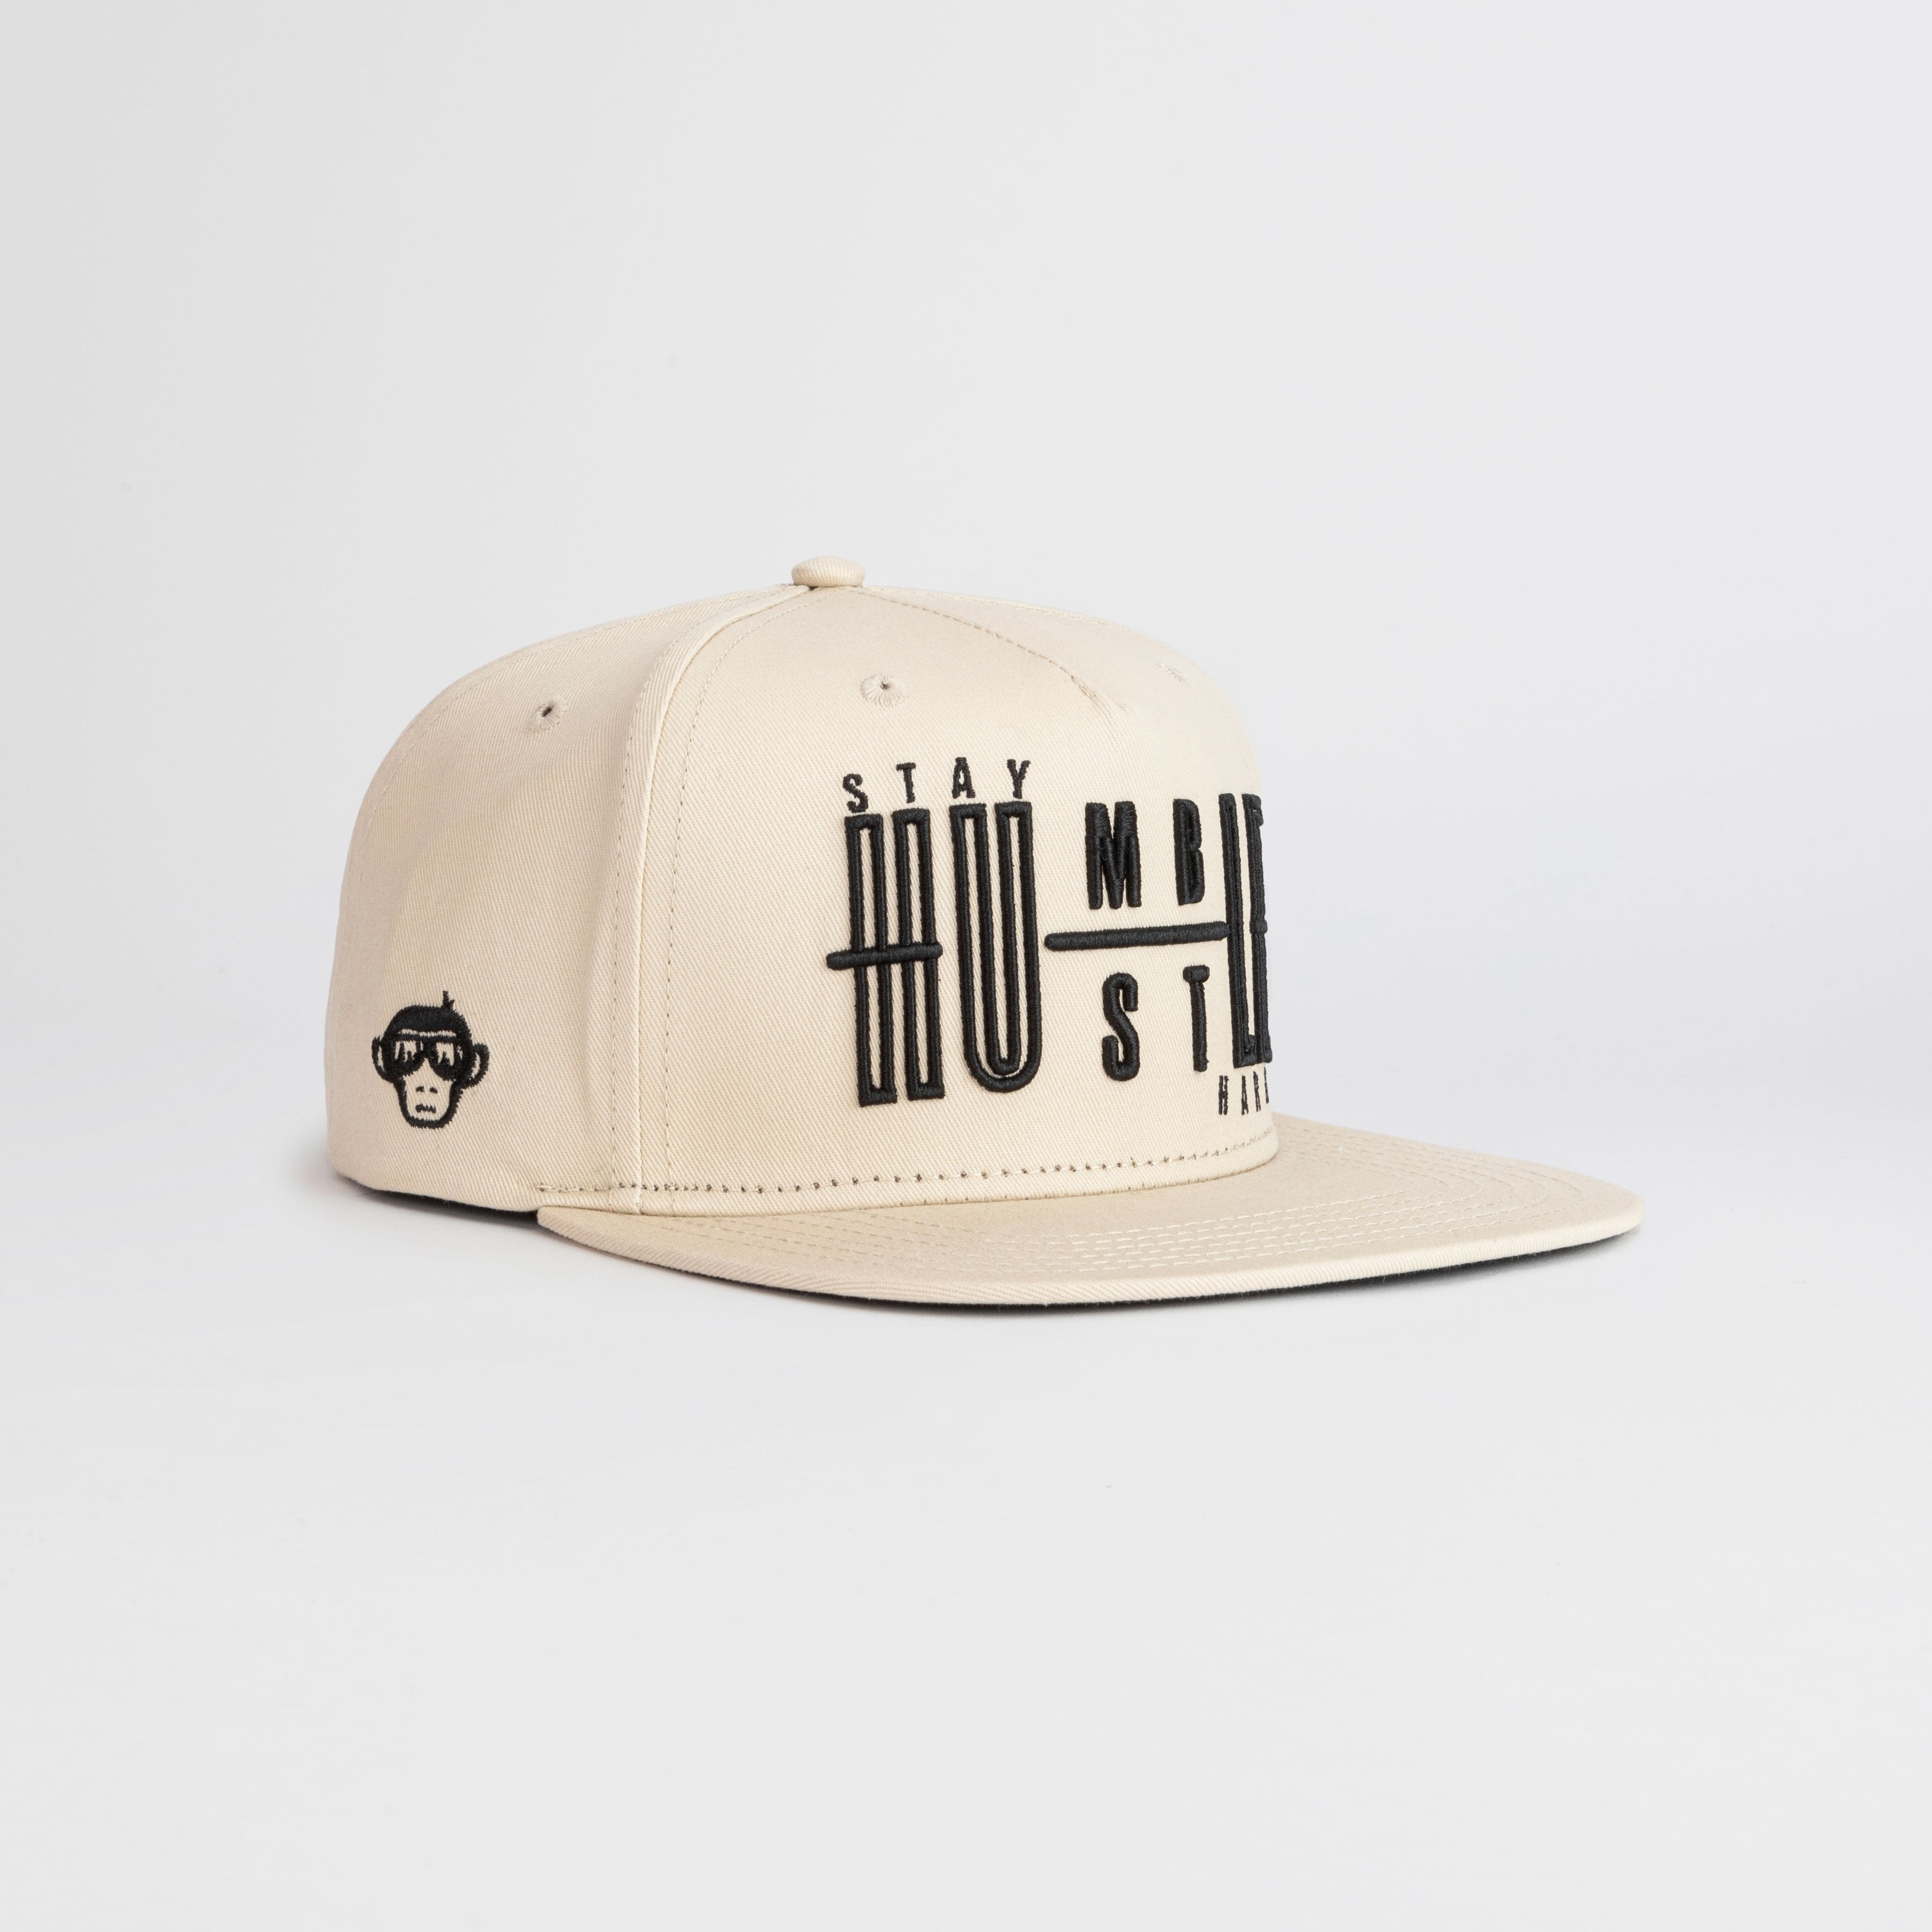 Urban Monkey Super Suede Caps 🧢 #caps #capdesign #headwear